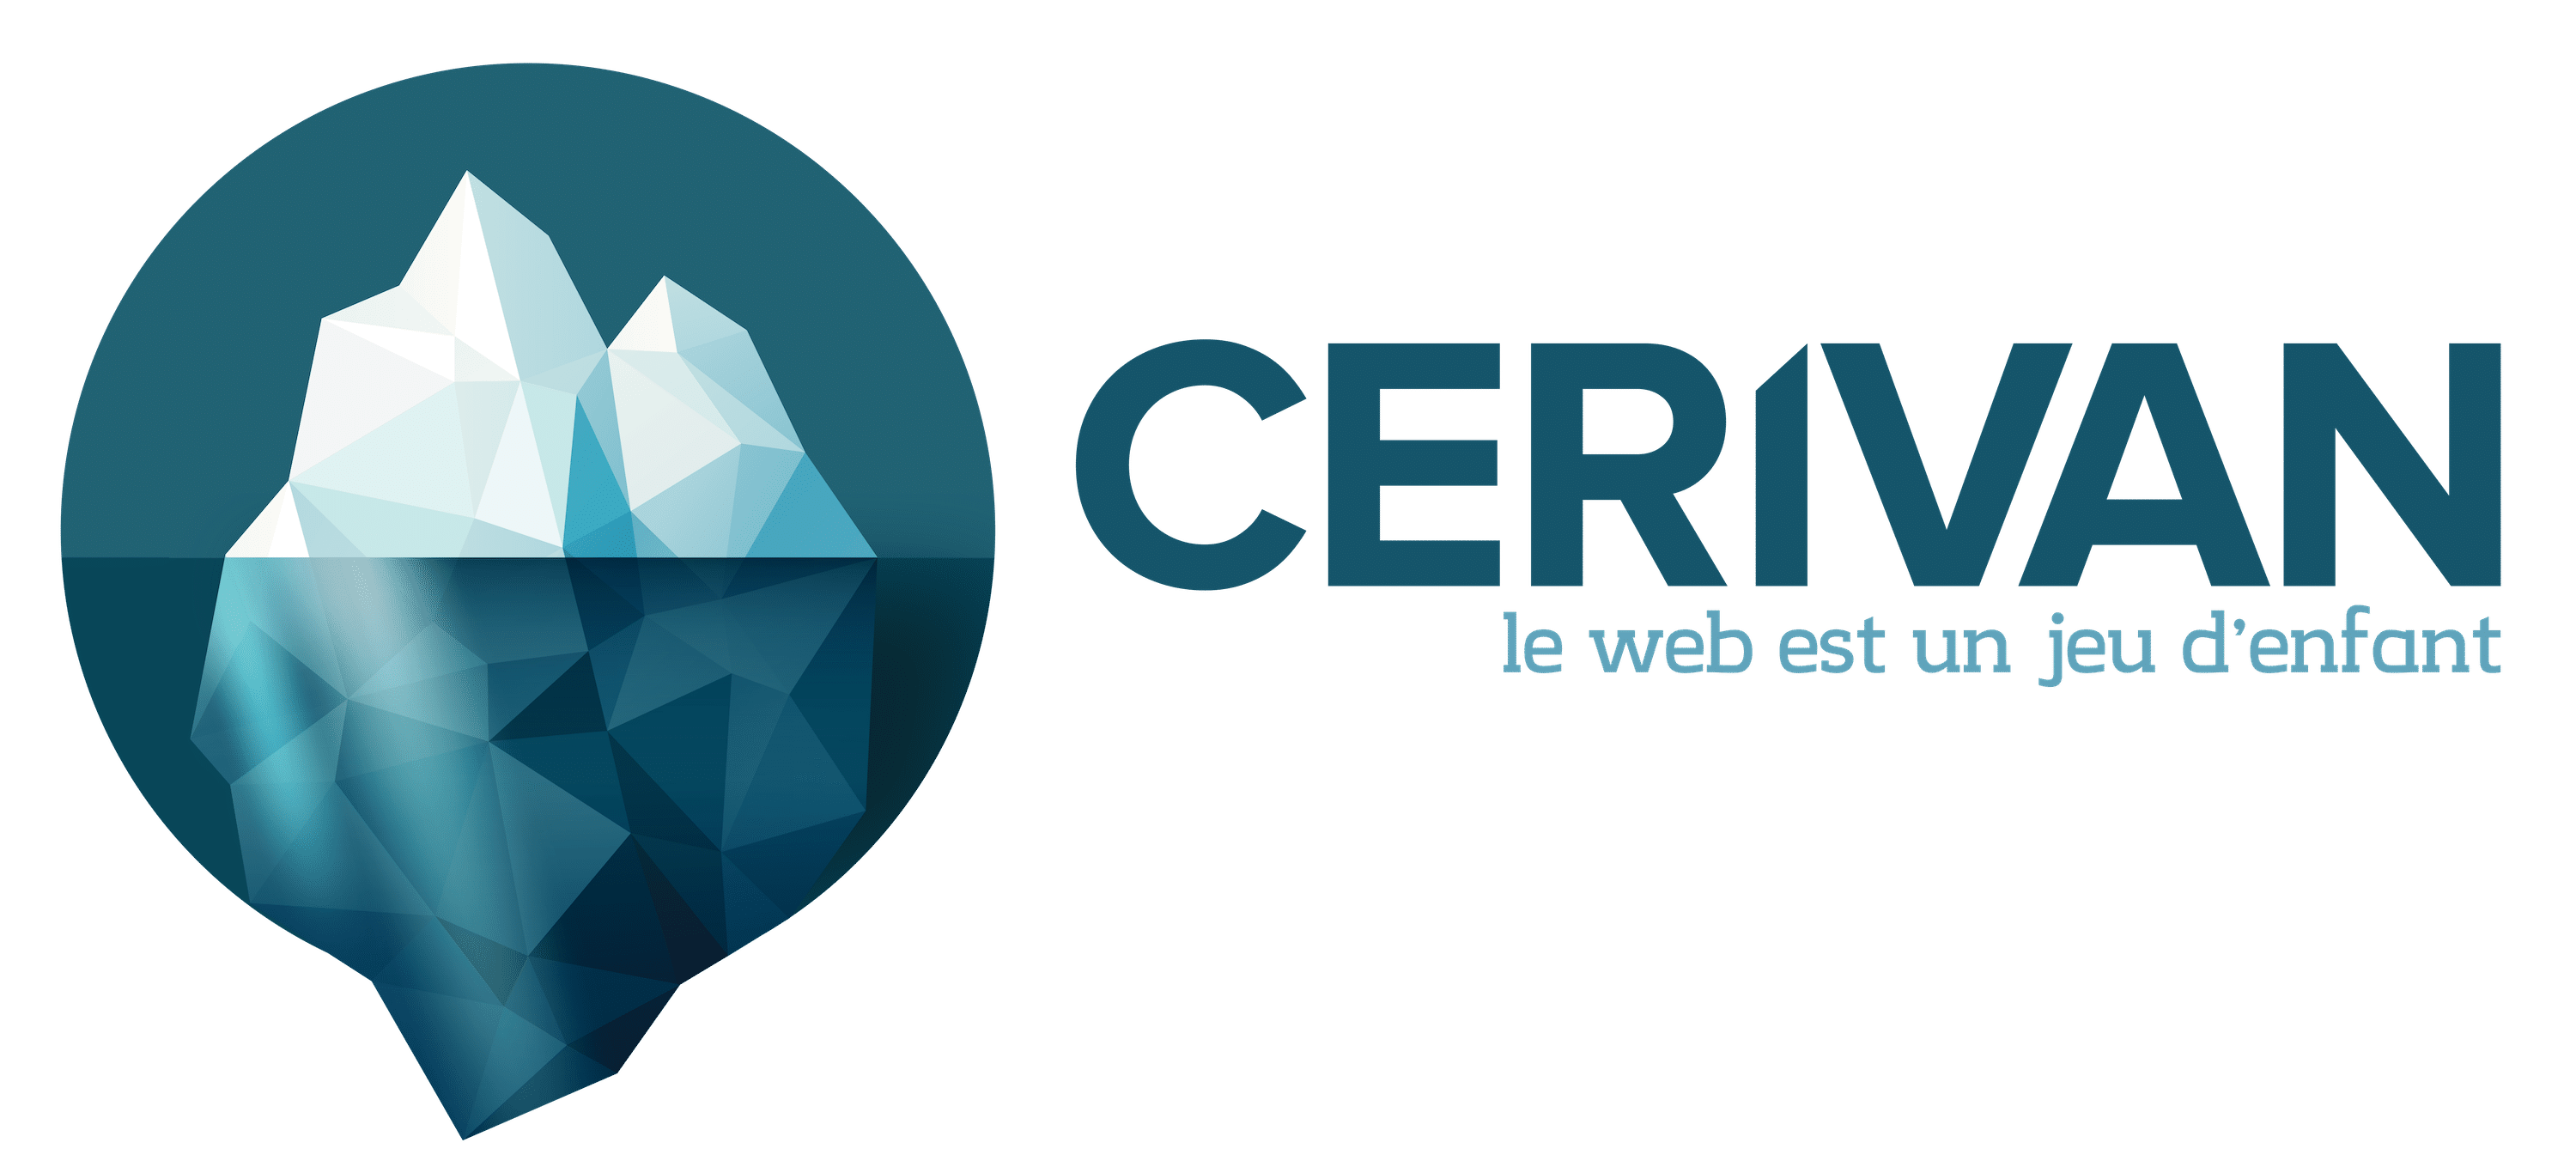 (c) Cerivan.com